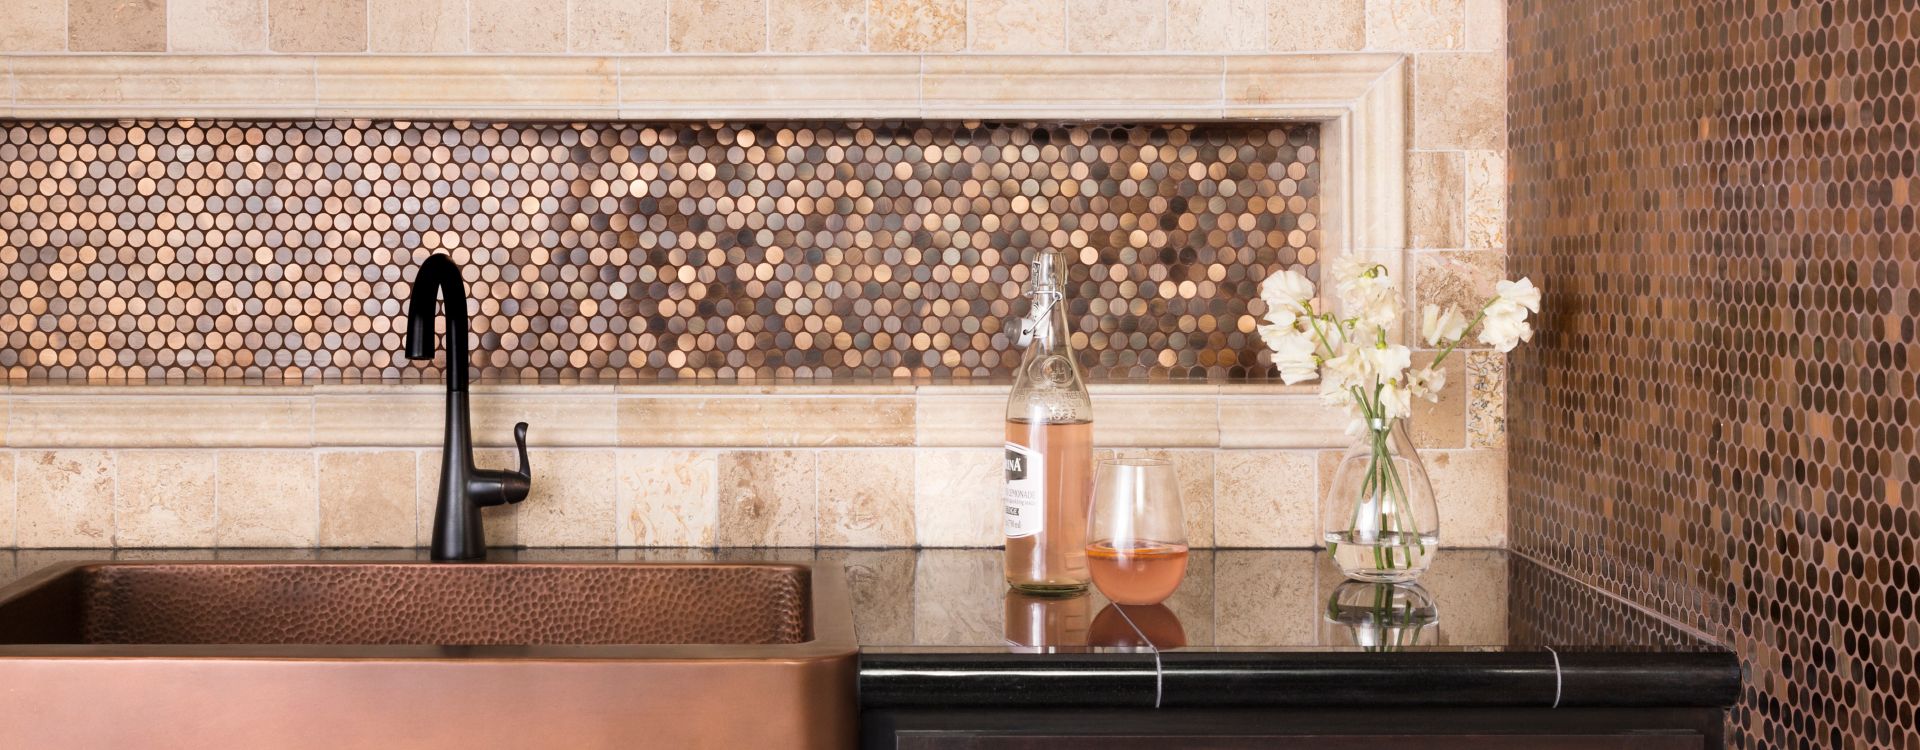 Kitchen backsplash with copper metallic tile.